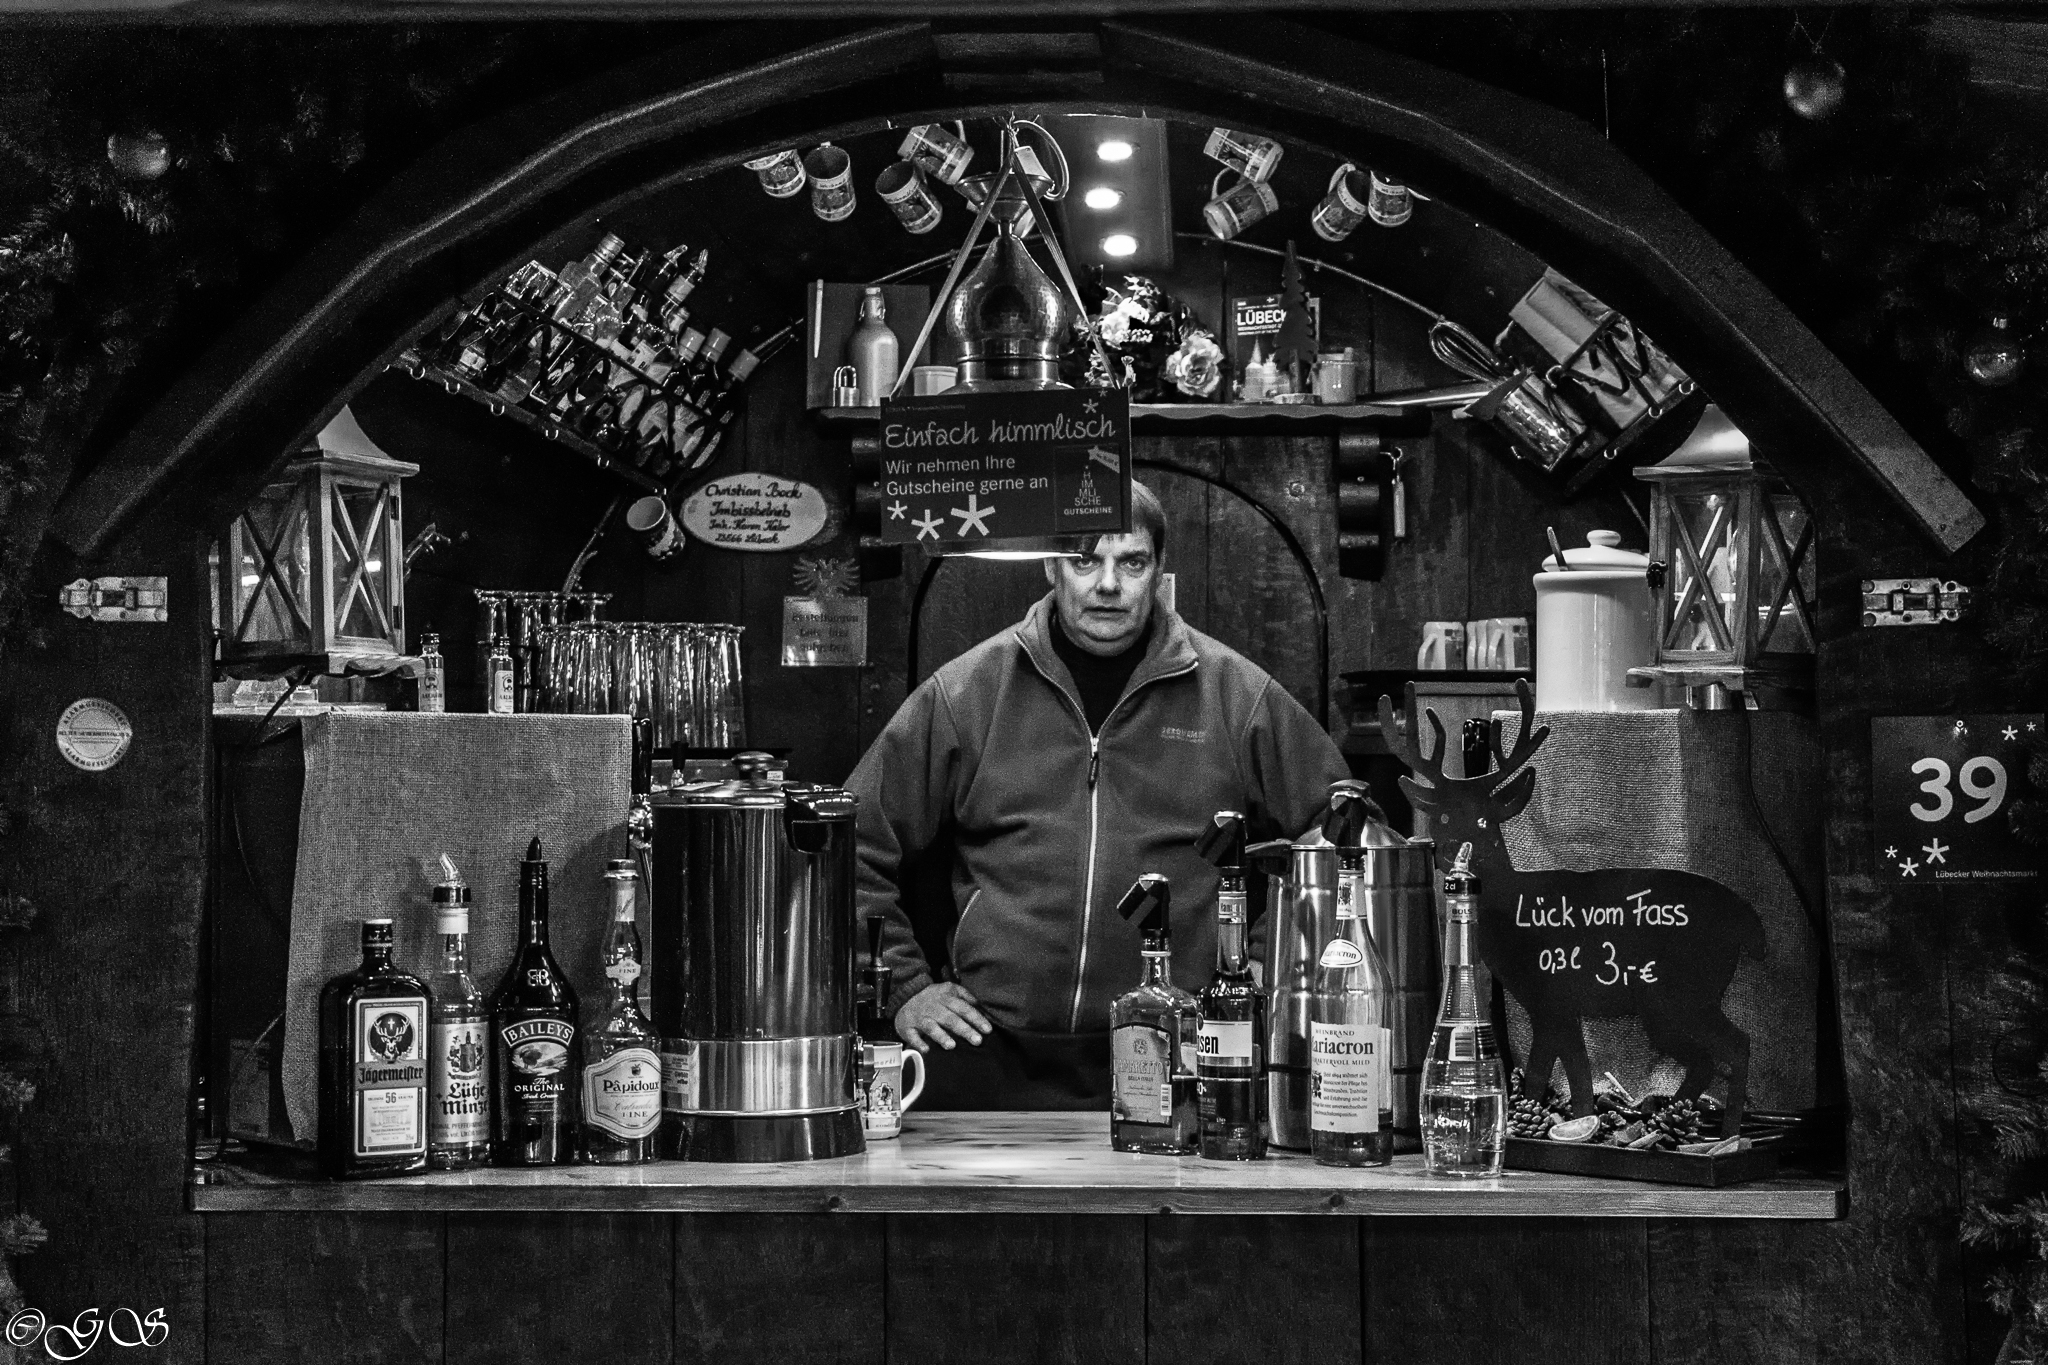 The Barman...